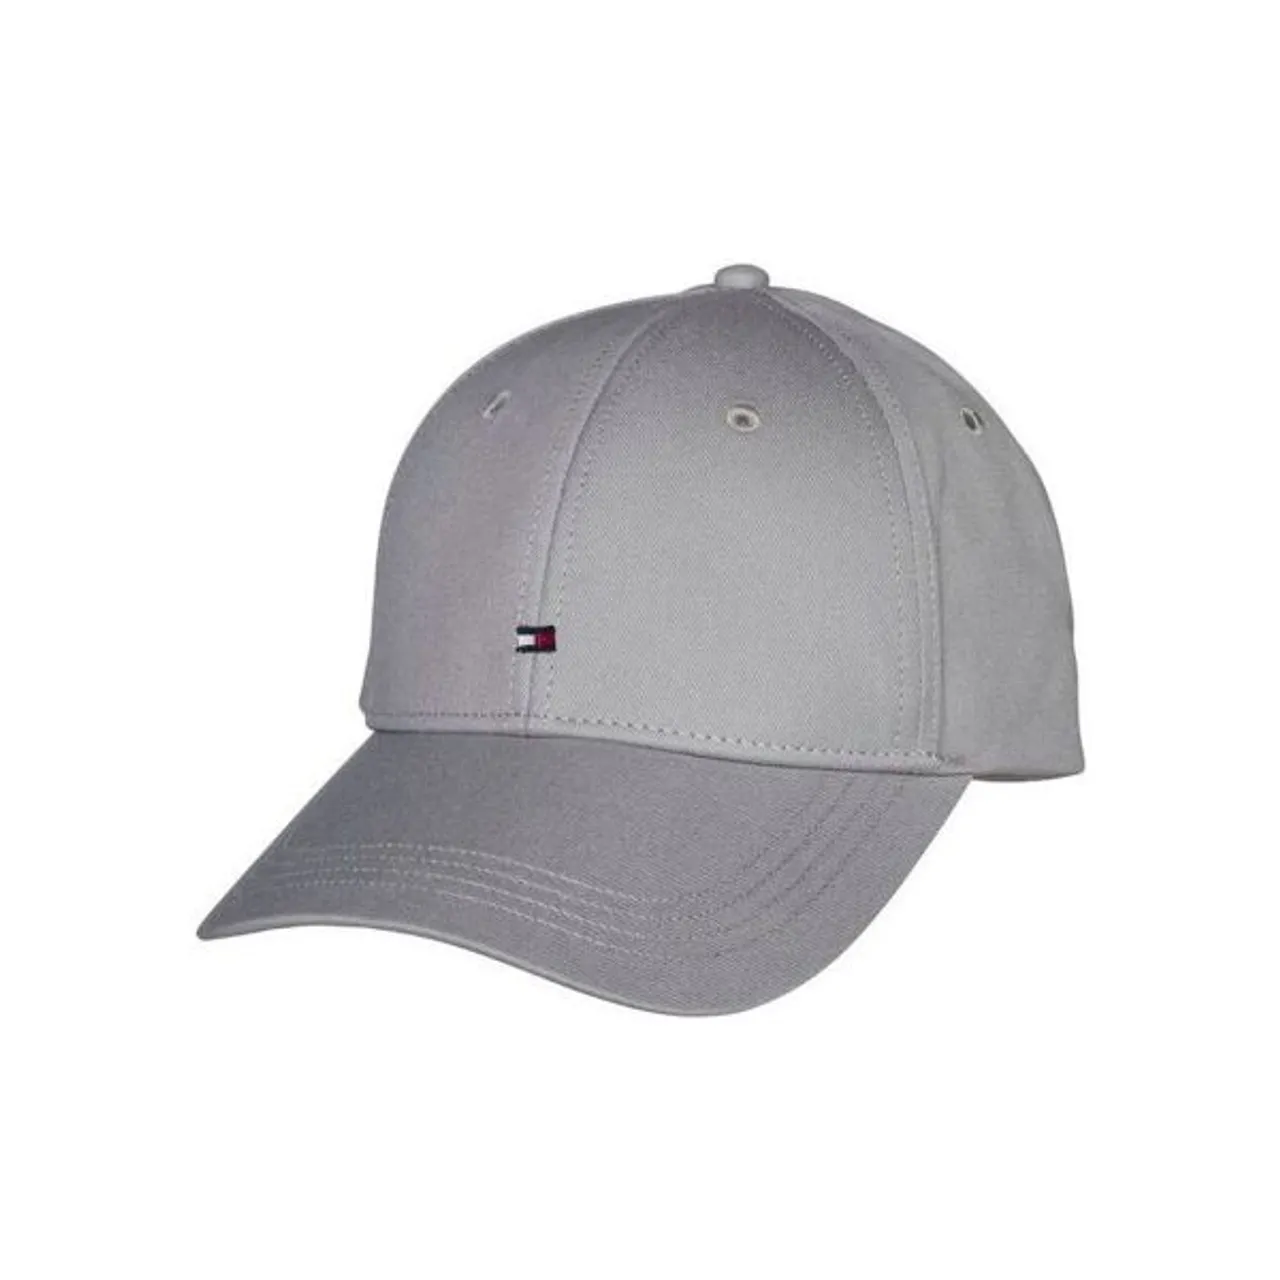 Baseball Cap TOMMY HILFIGER "CLASSIC BB CAP" grau (drizzle grey) Damen Caps Baseball